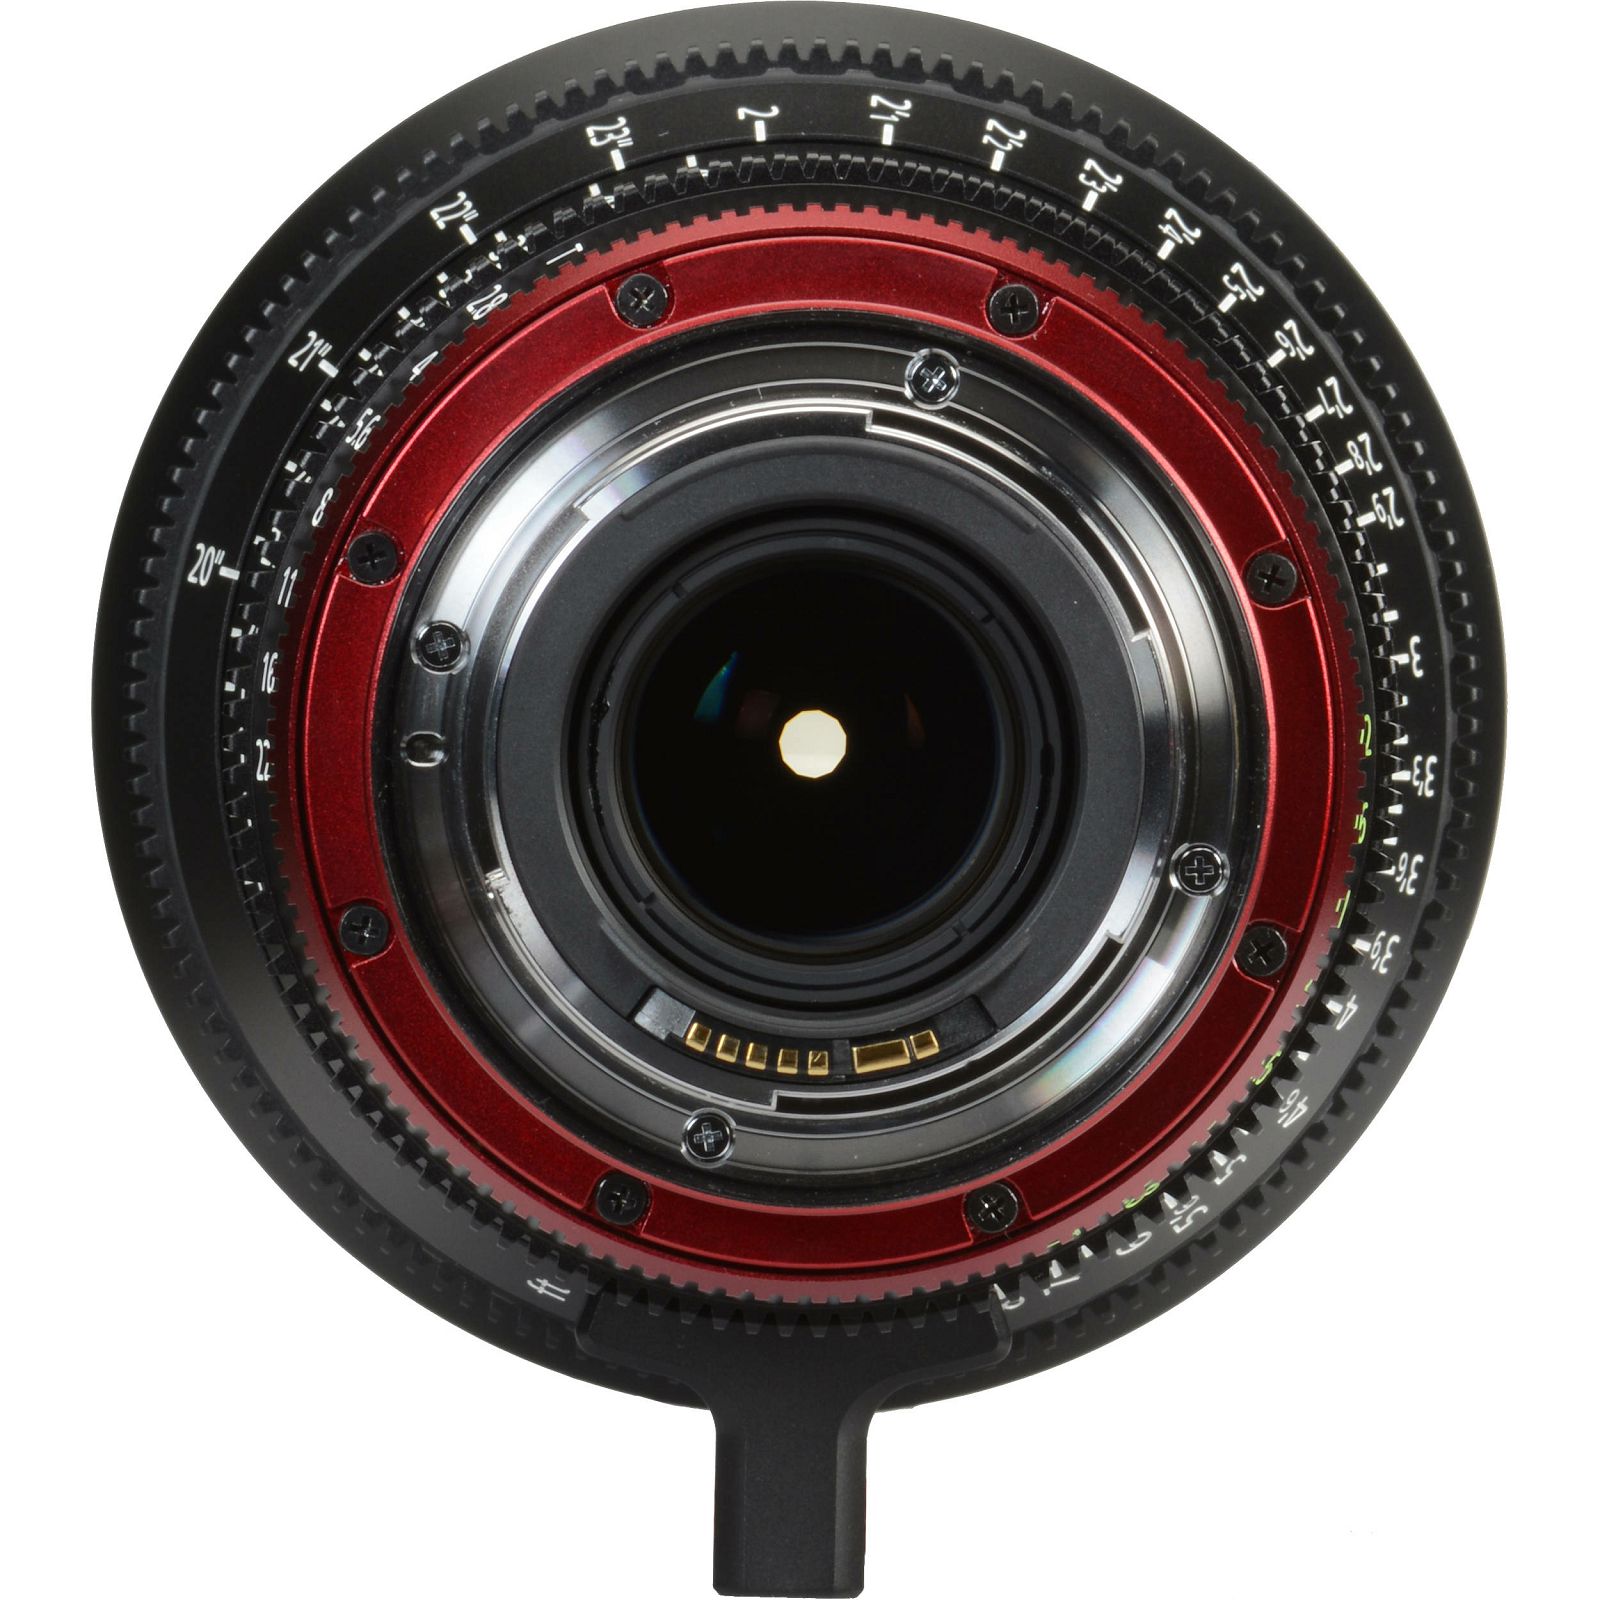 Canon CN-E 15.5-47mm T2.8 L S Wide-Angle Cinema Zoom Cine Lens širokokutni filmski objektiv EF Mount (7622B004AC)